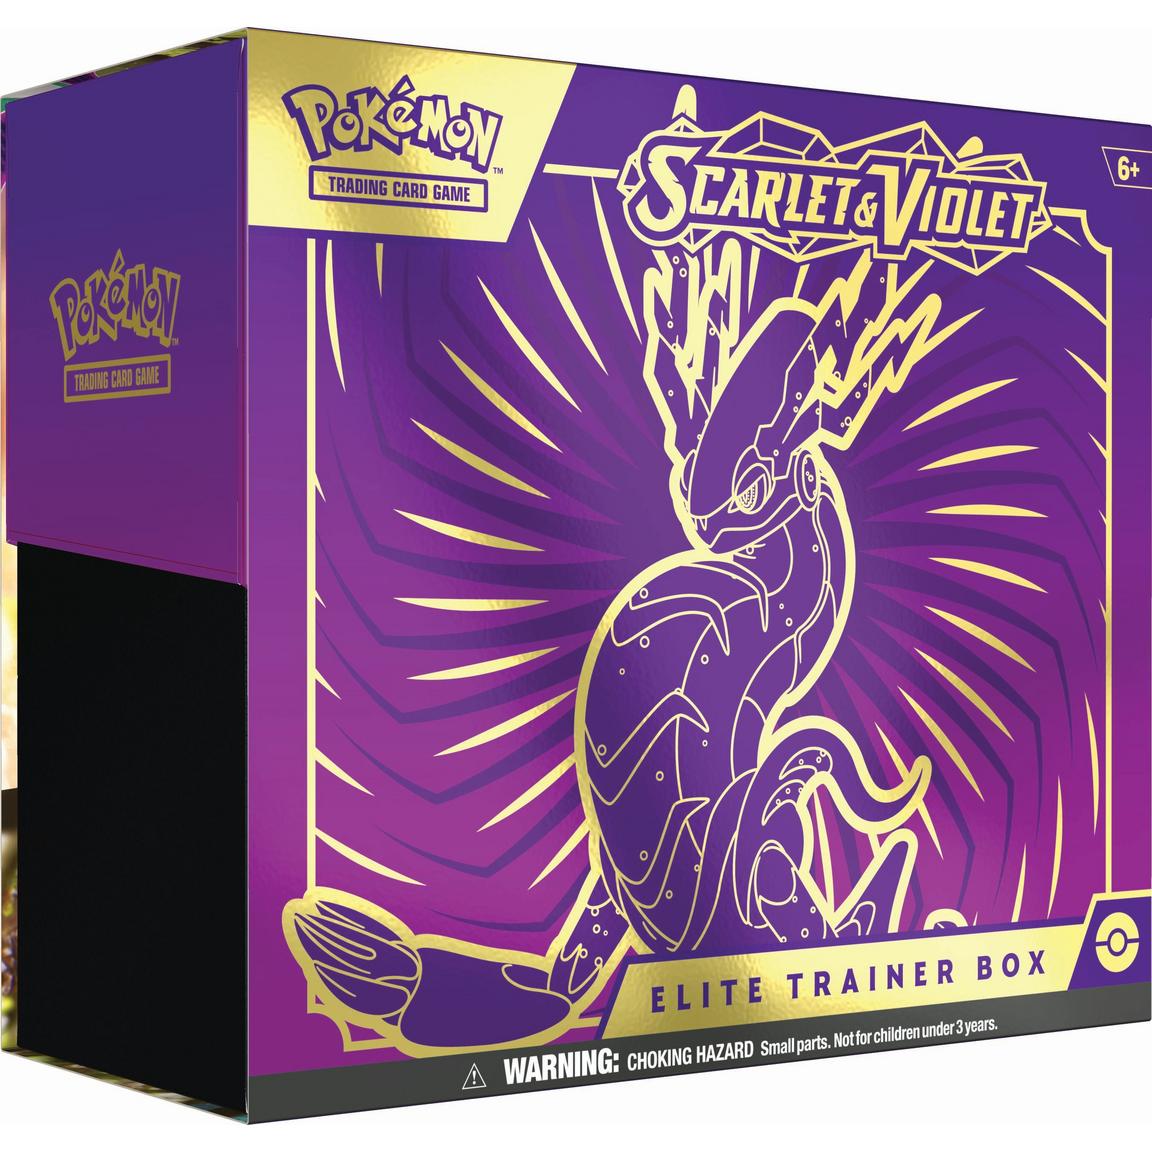 Pokémon: Scarlet & Violet Elite Trainer Box